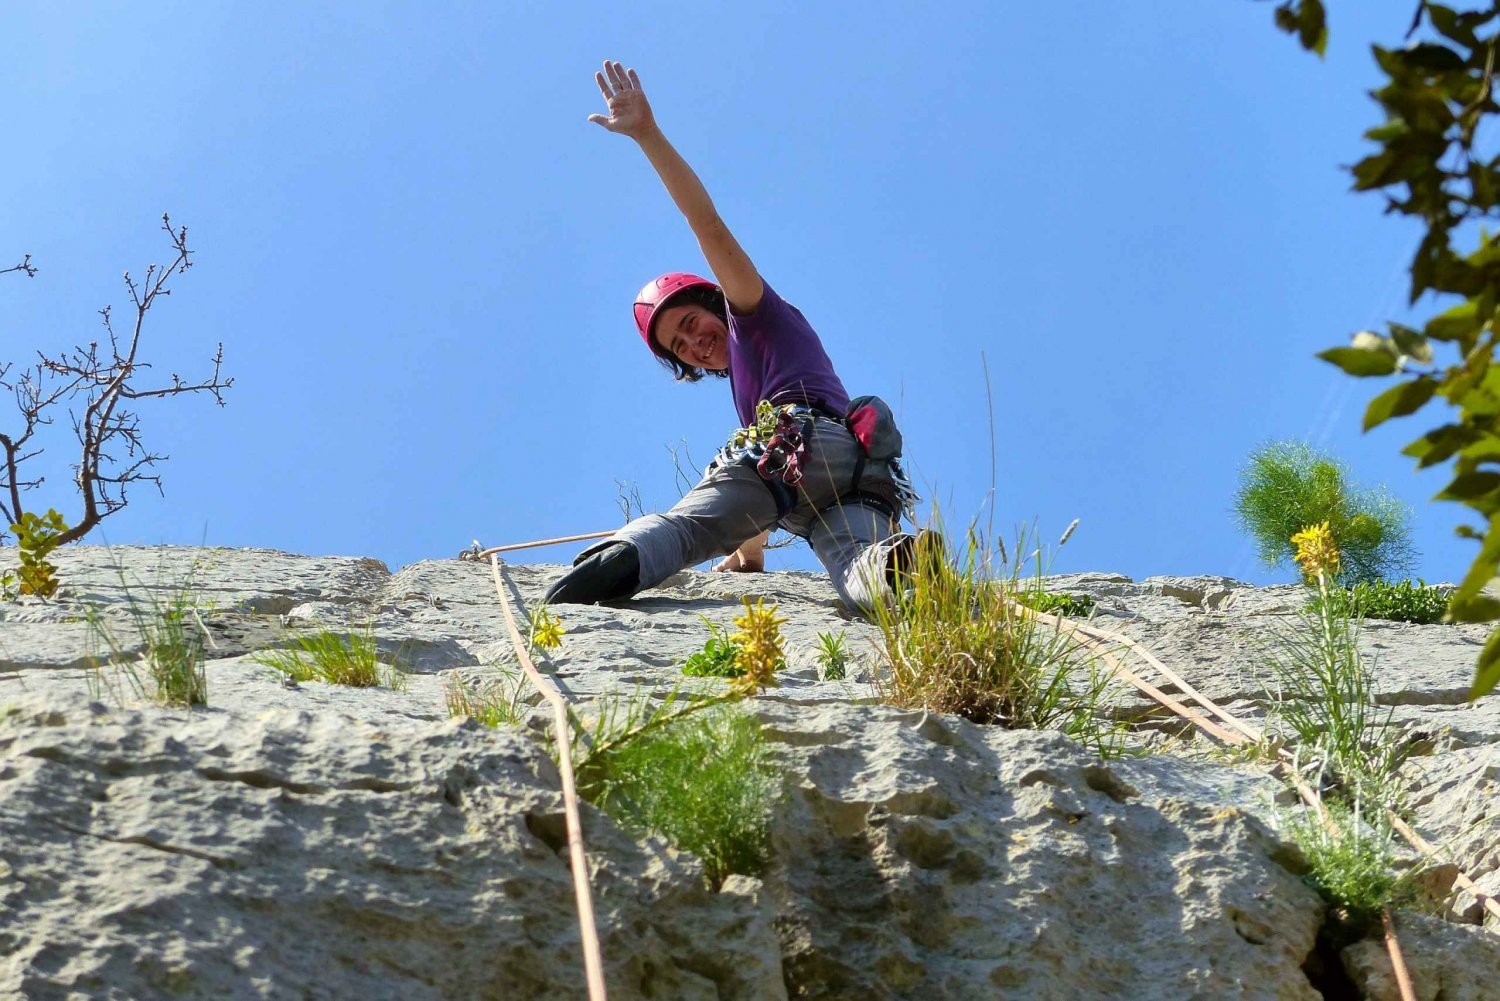 Rock Climbing Lesson in Dubrovnik